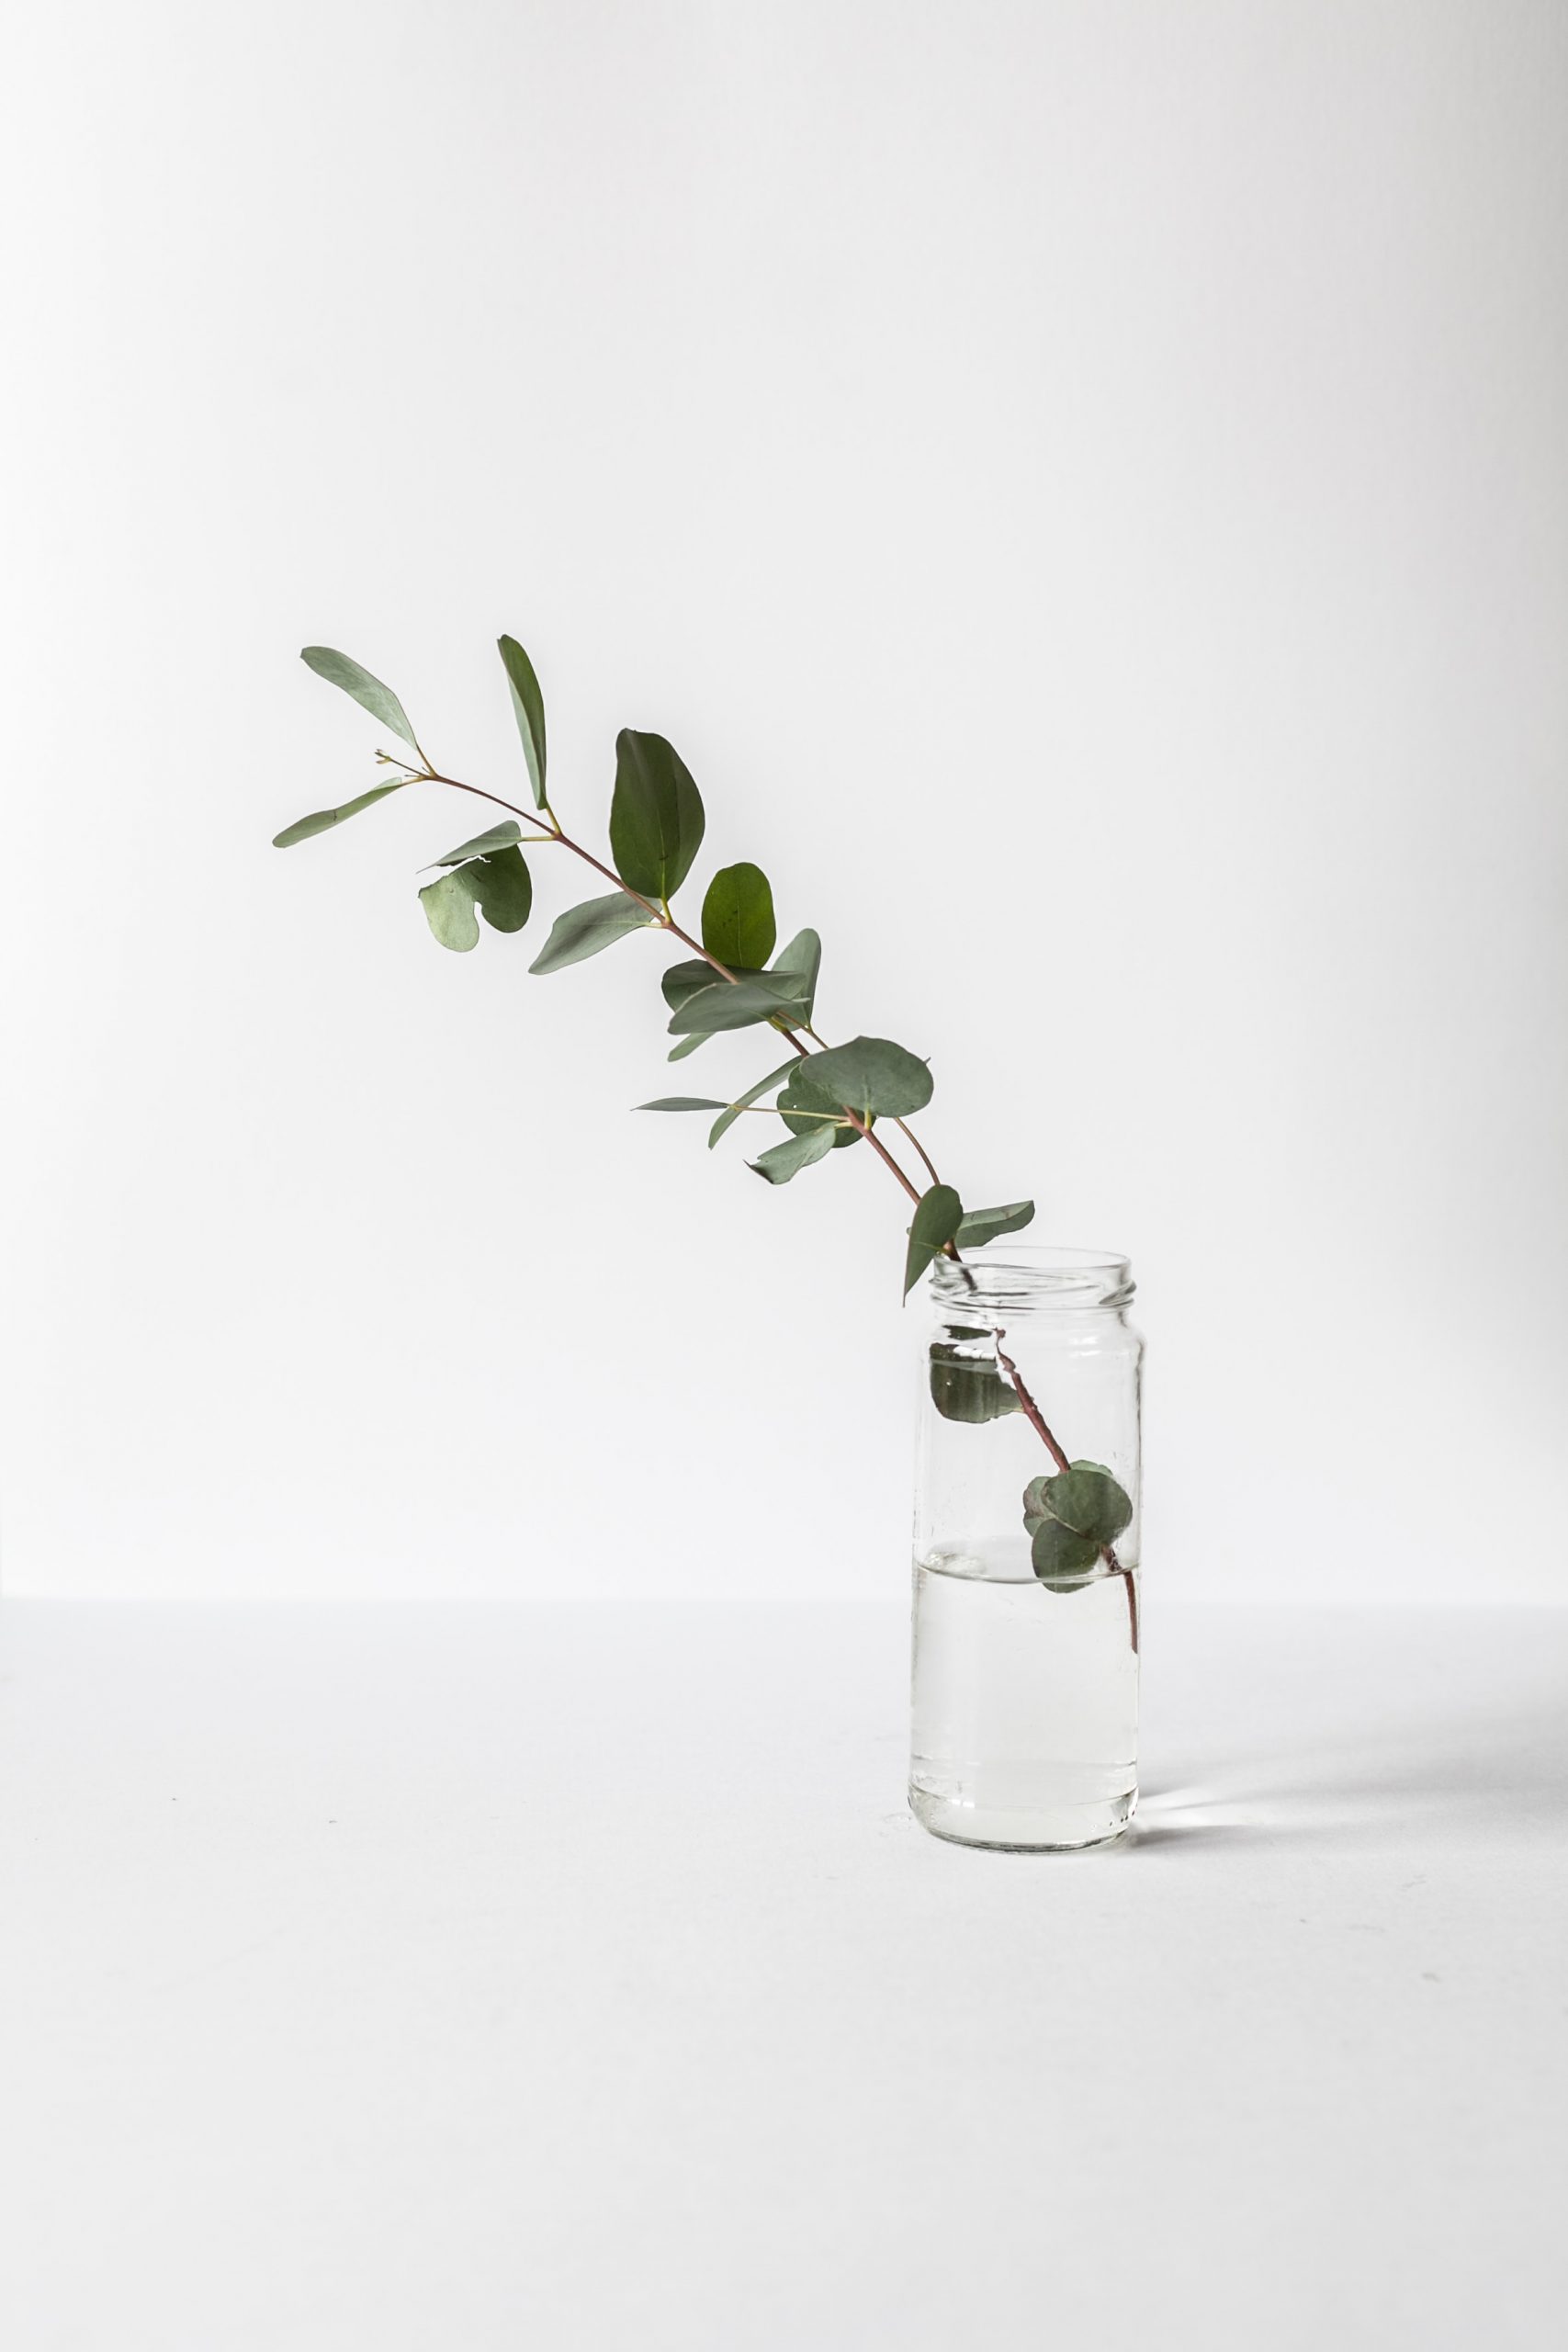 Green leafed plant in glass jar